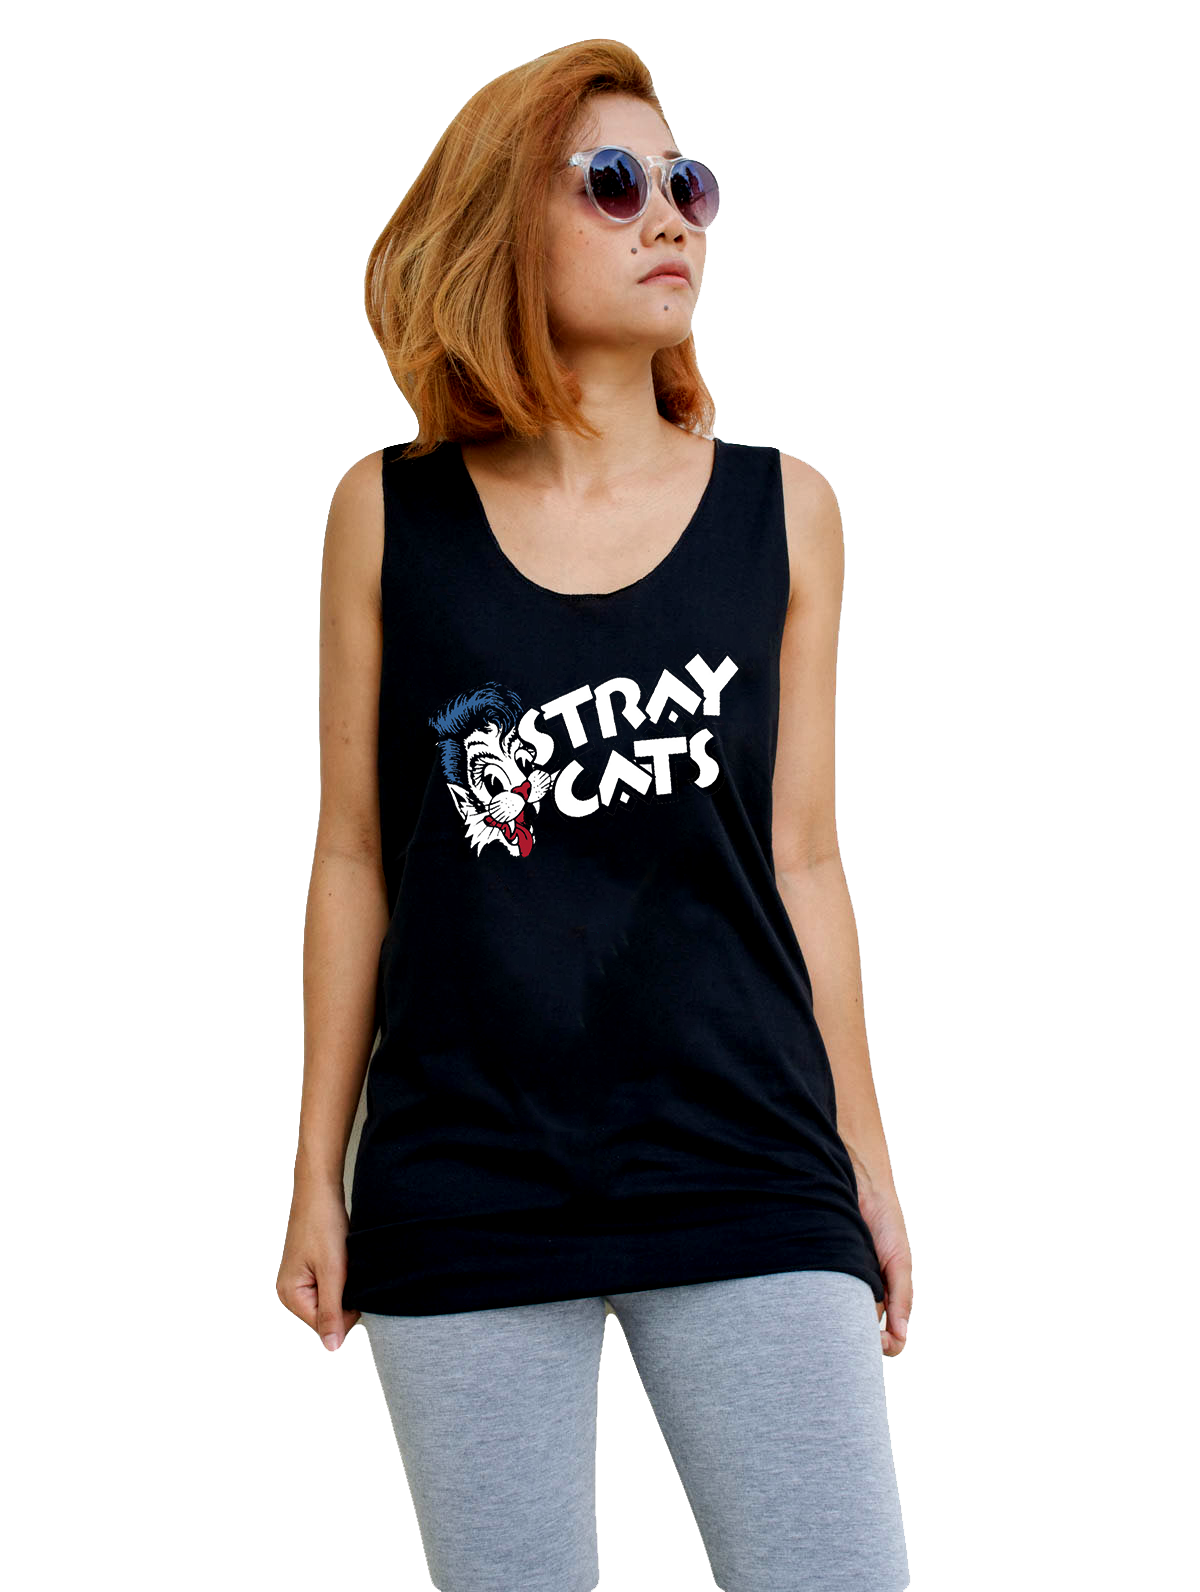 Unisex The Stray Cats Tank-Top Singlet vest Sleeveless T-shirt